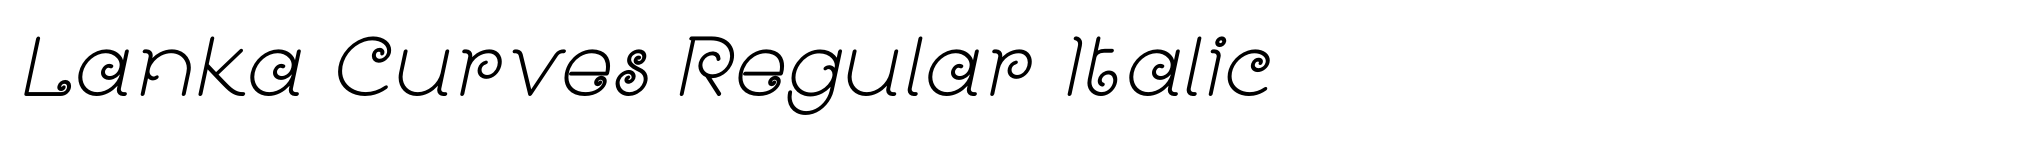 Lanka Curves Regular Italic image